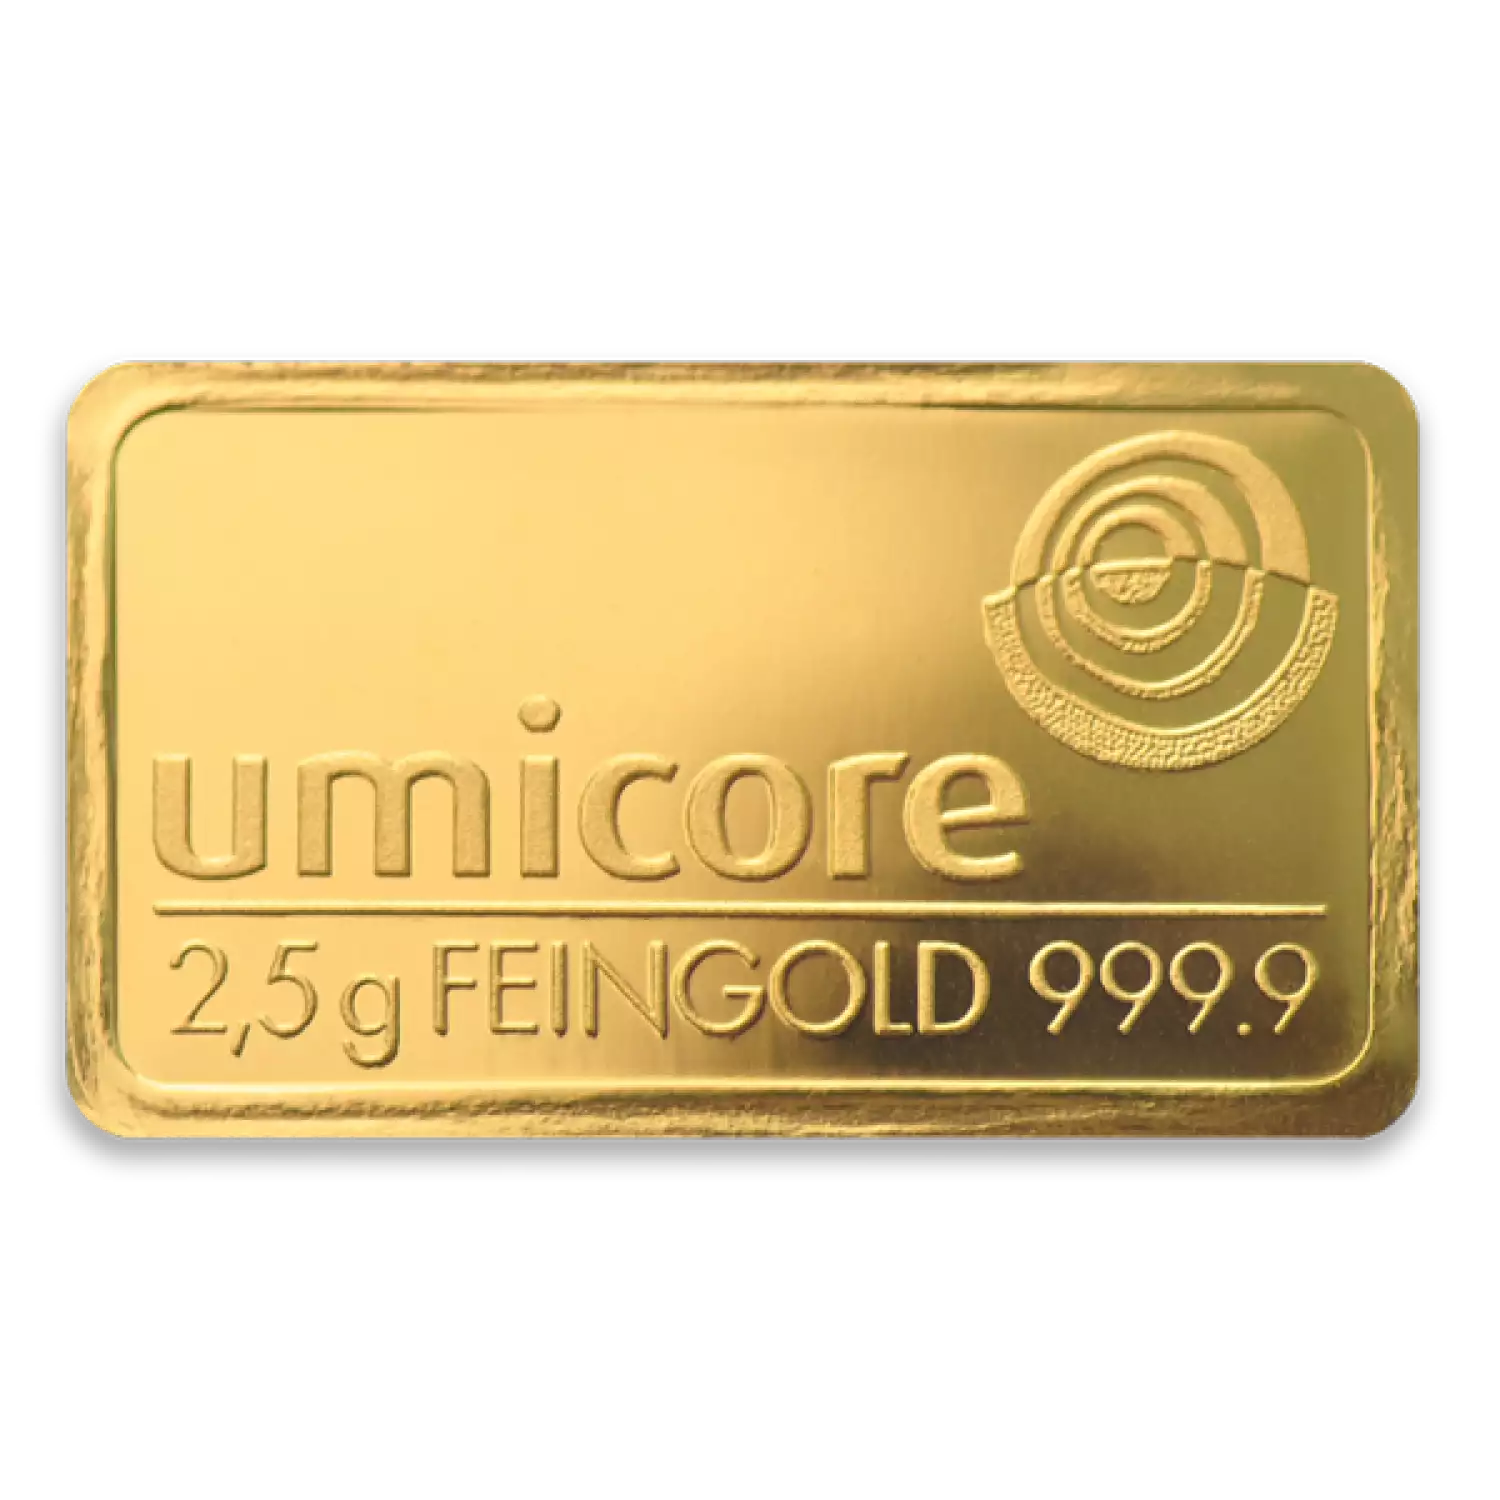 Generic 2.5g Gold Bar